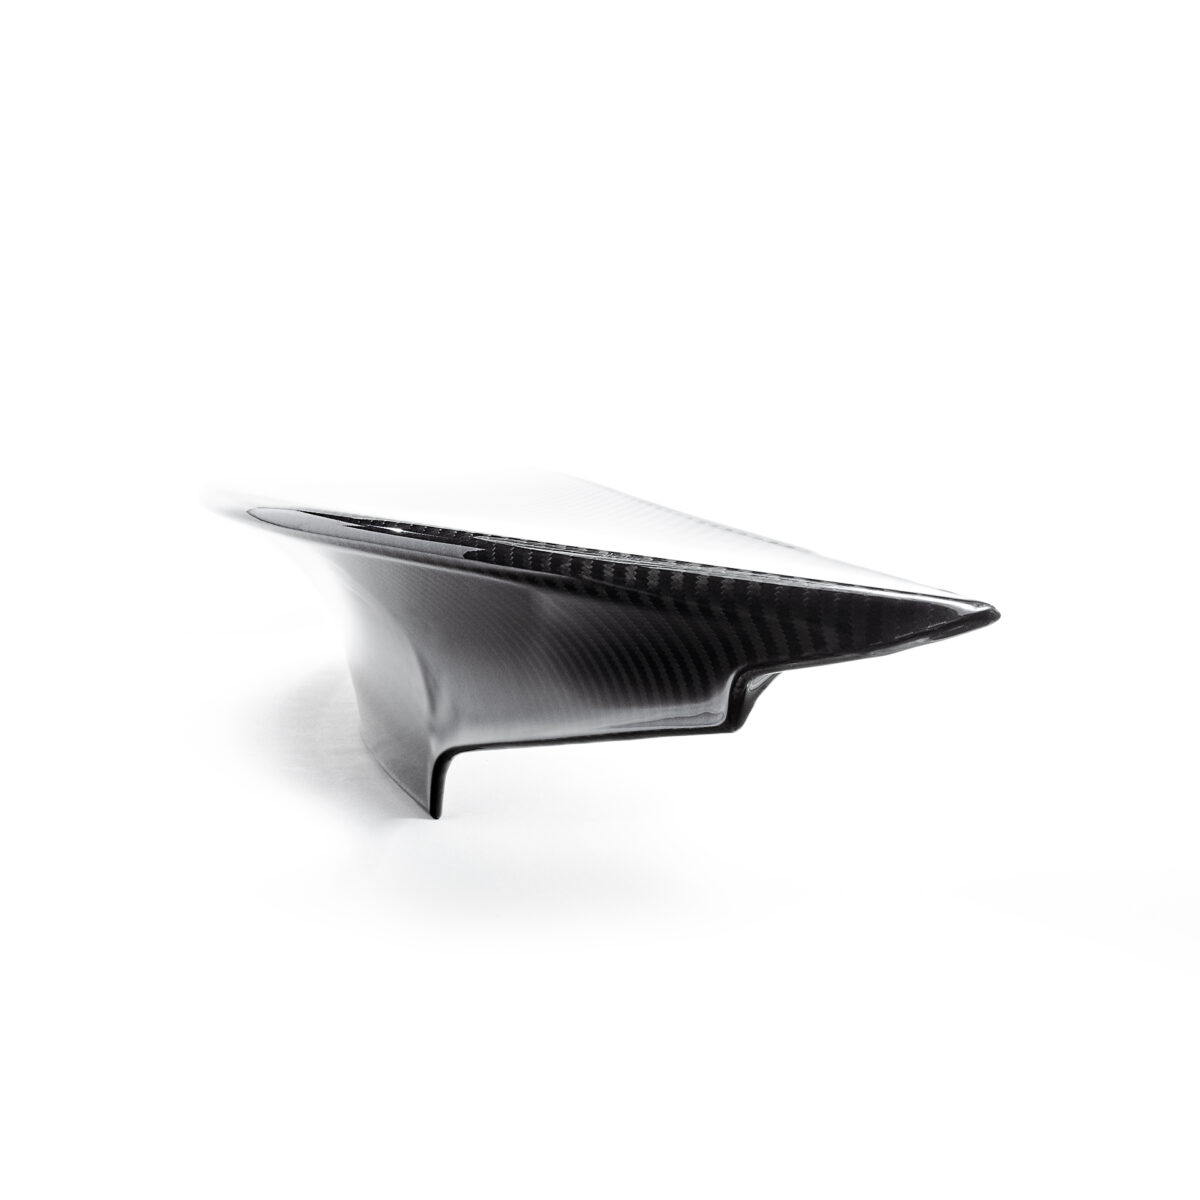 UP x Koenigsegg collaboration - Model S Carbon Fiber Long Tail Trunk Spoiler